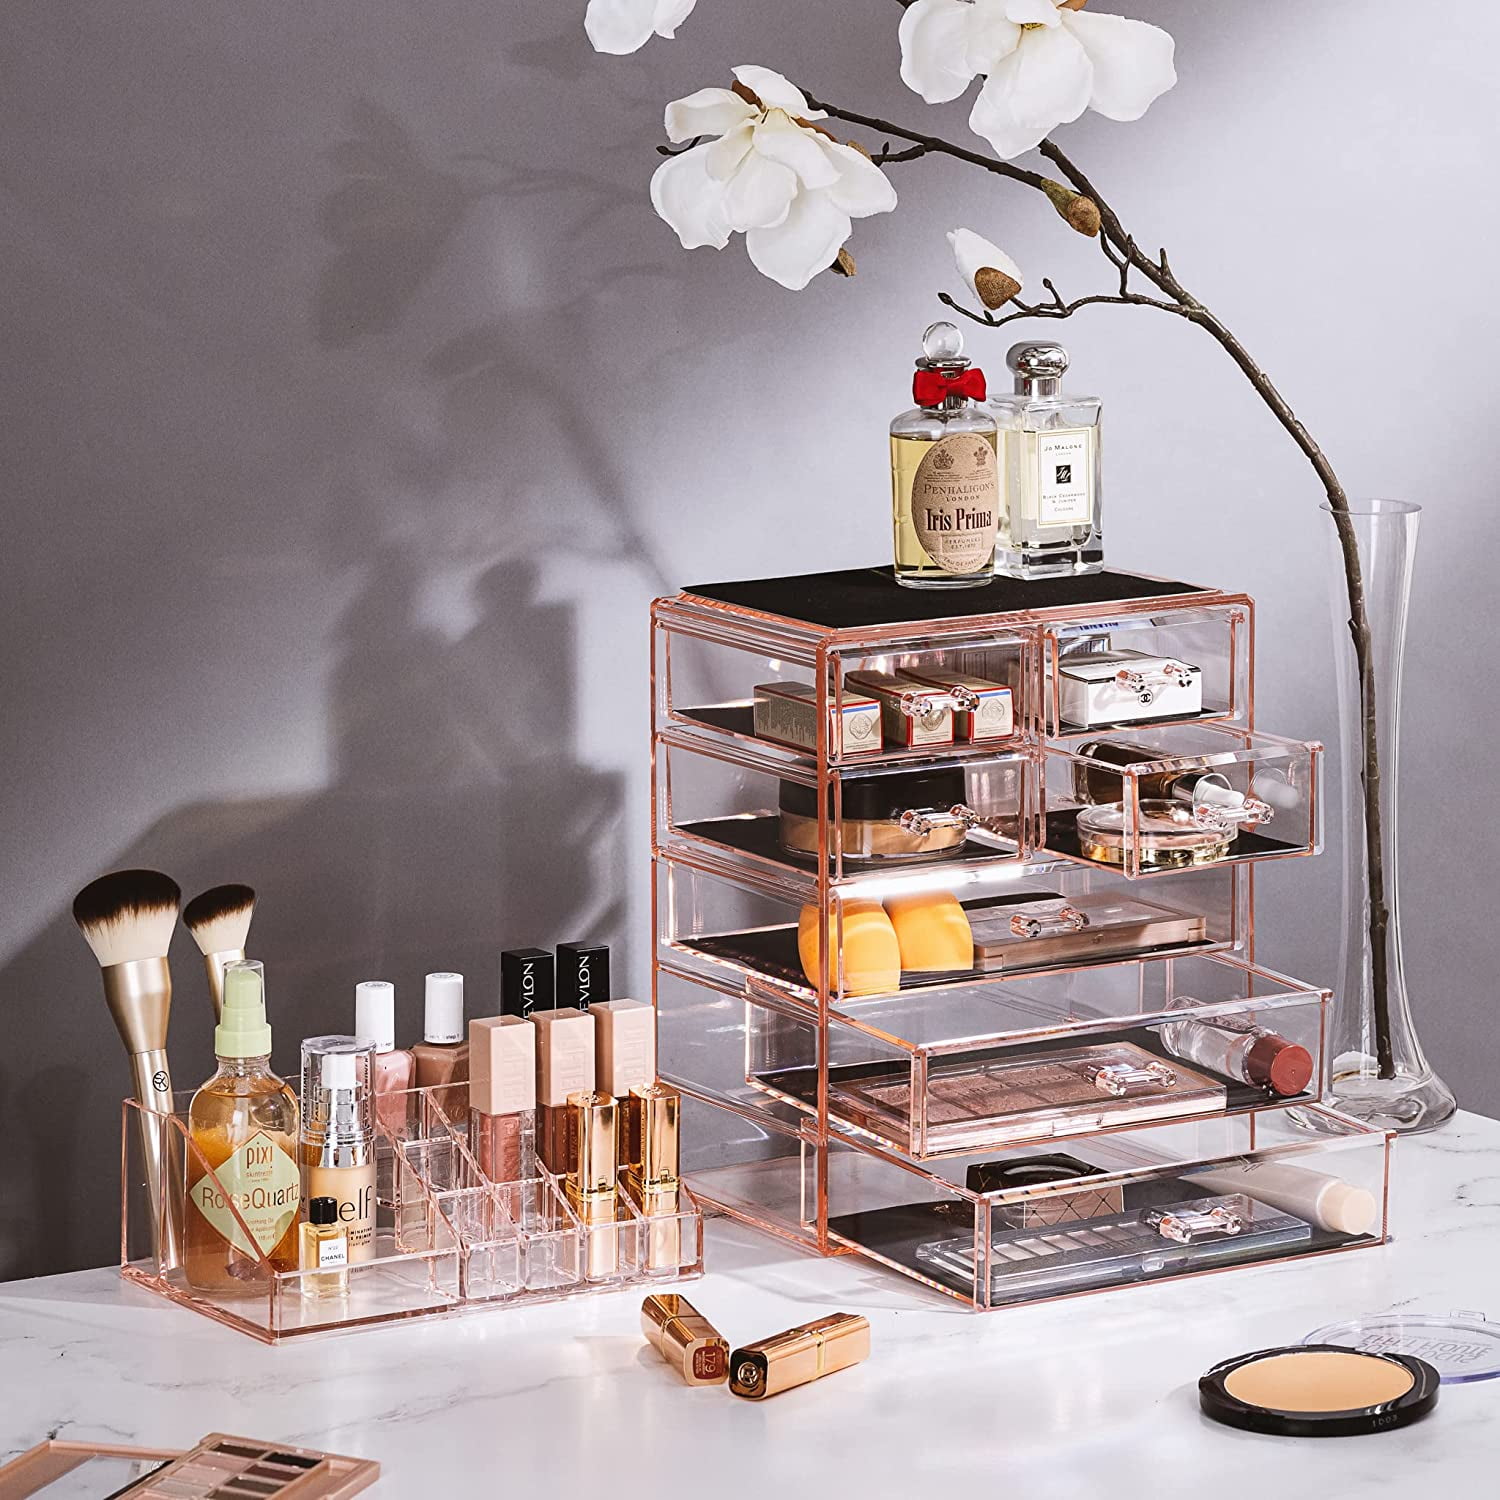 Byootique Makeup Train Case Storage Box Cosmetic Organizer w/ 2 Drawer Jewelry